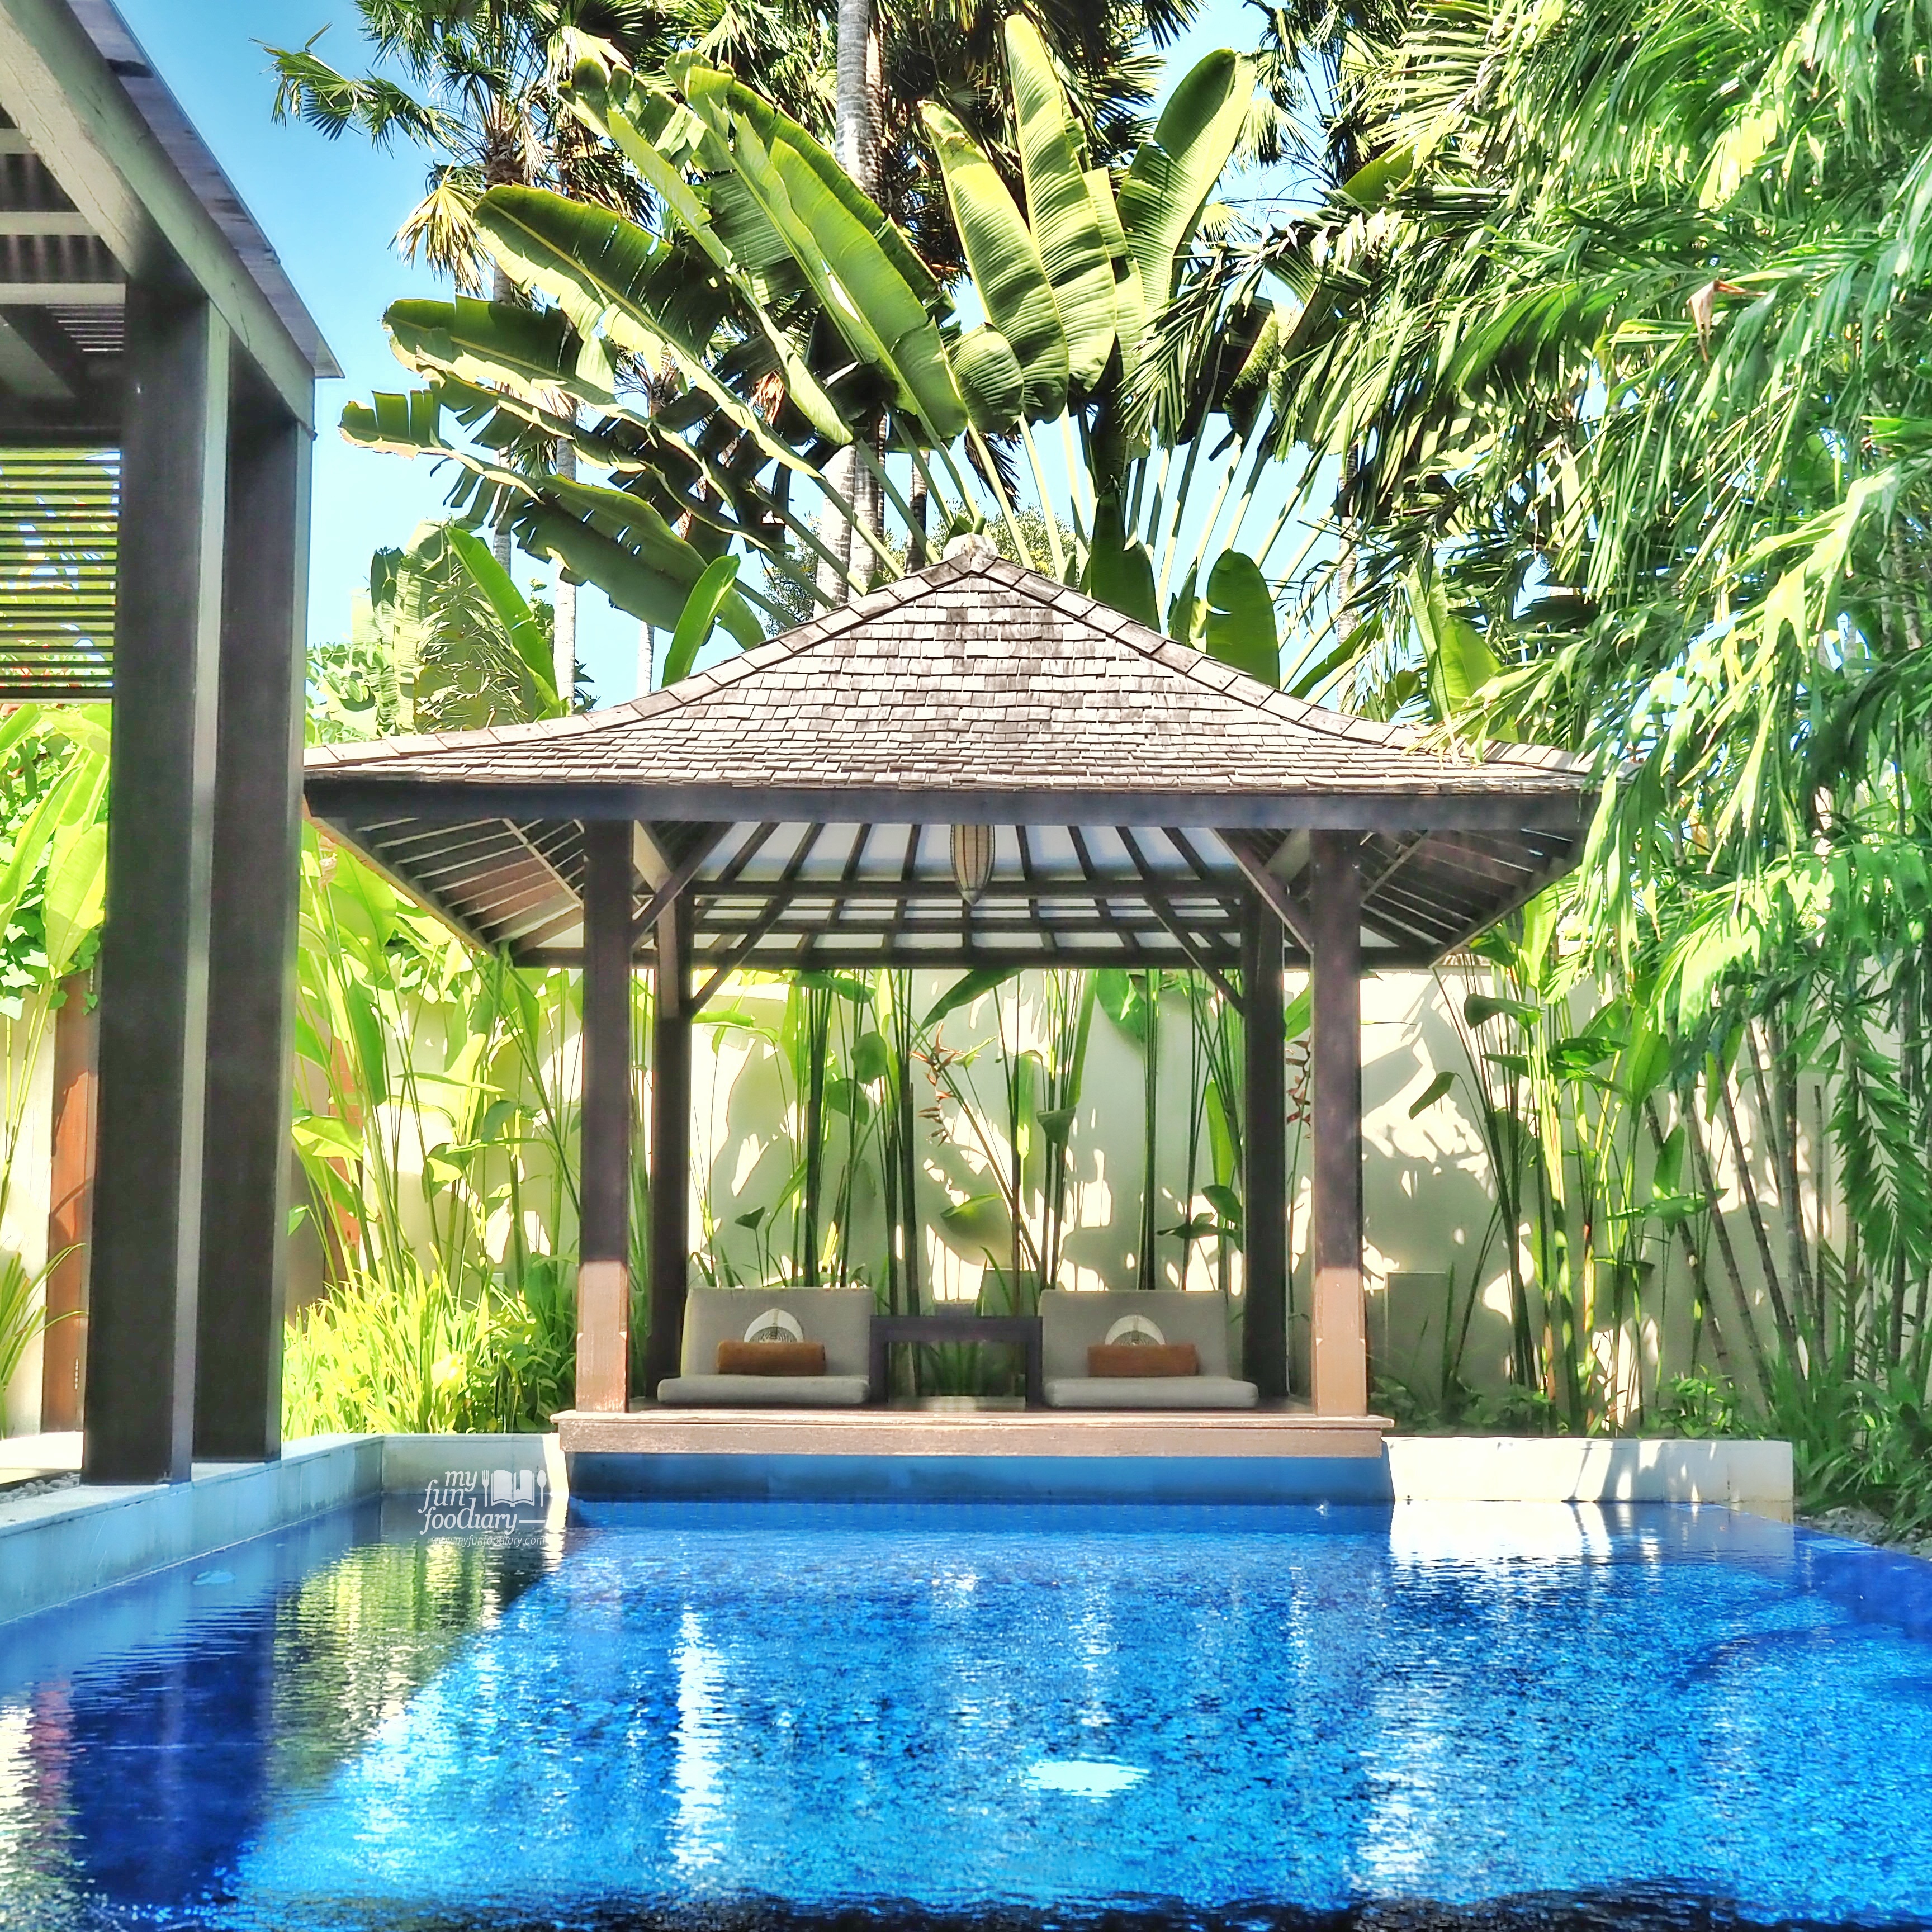 Pool and Gazebo View in my private villa - Villa De Daun Kuta Bali by Myfunfoodiary